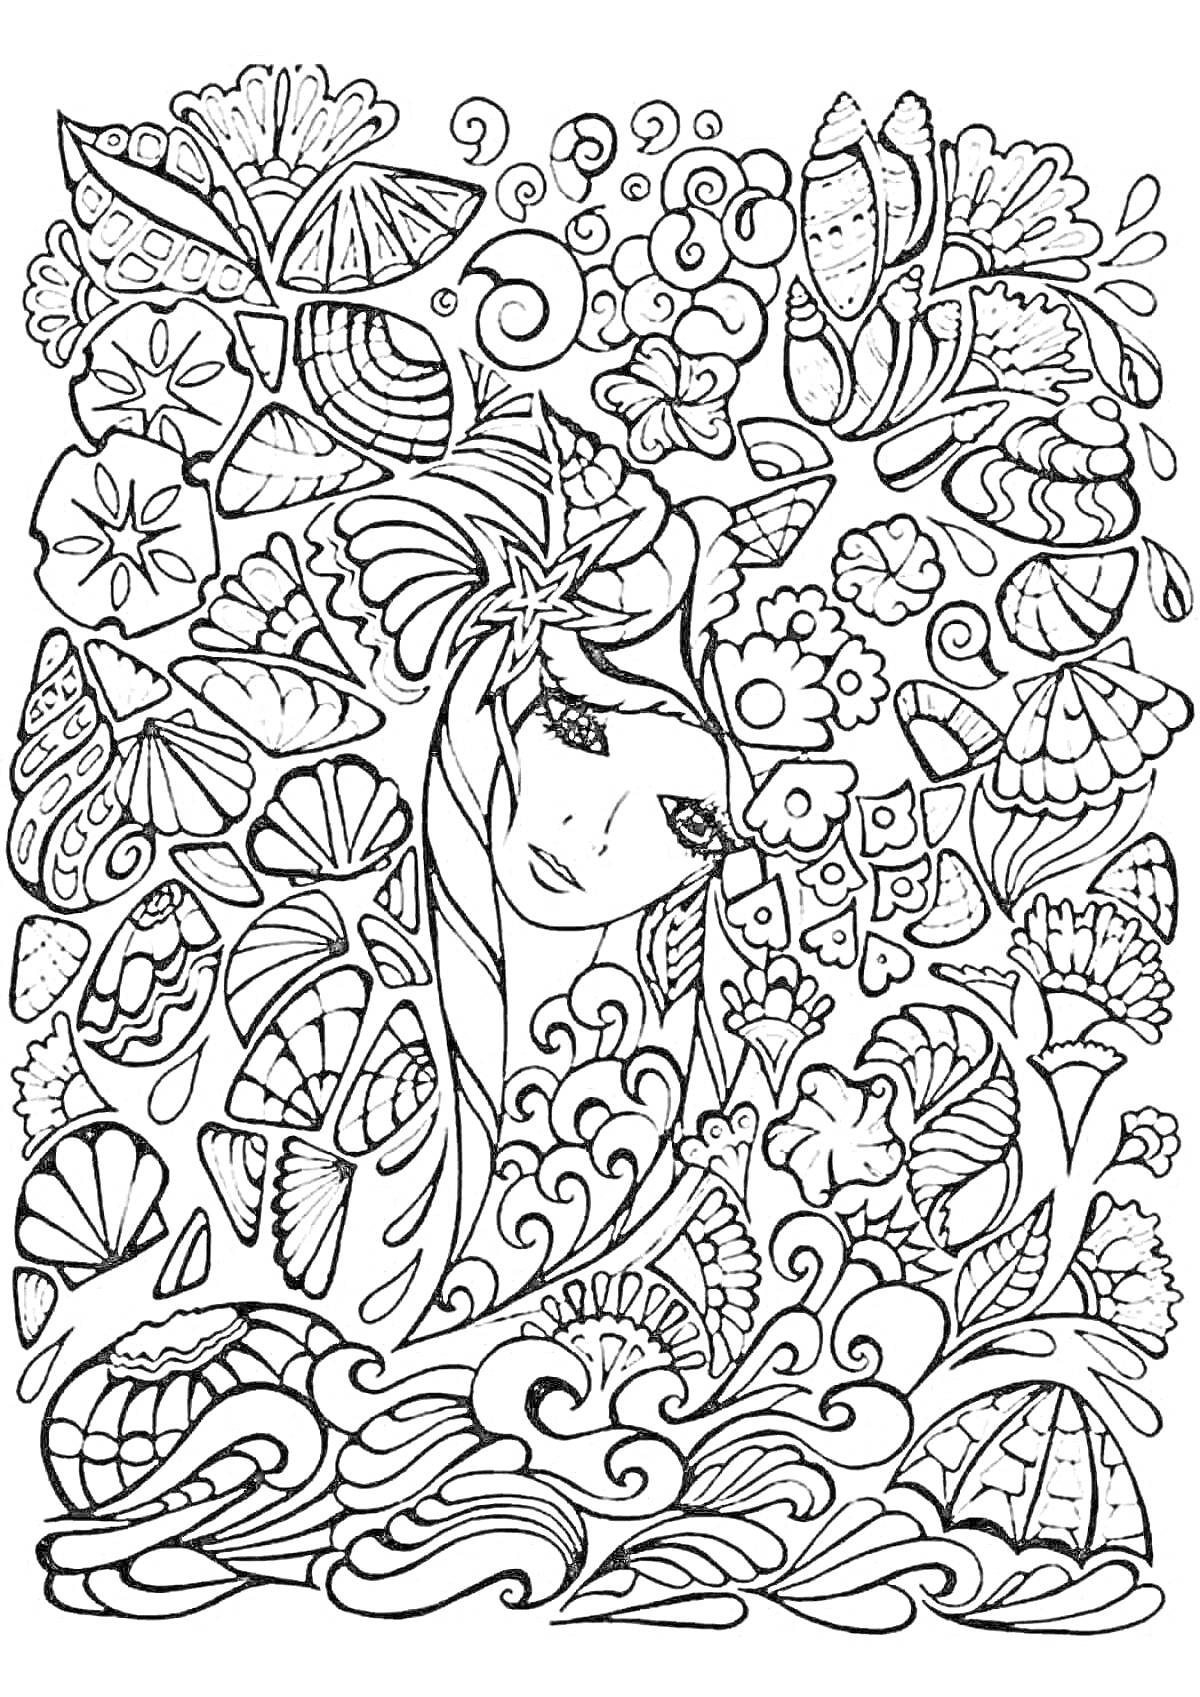 Раскраска Девушка с морскими ракушками, цветами и волнами